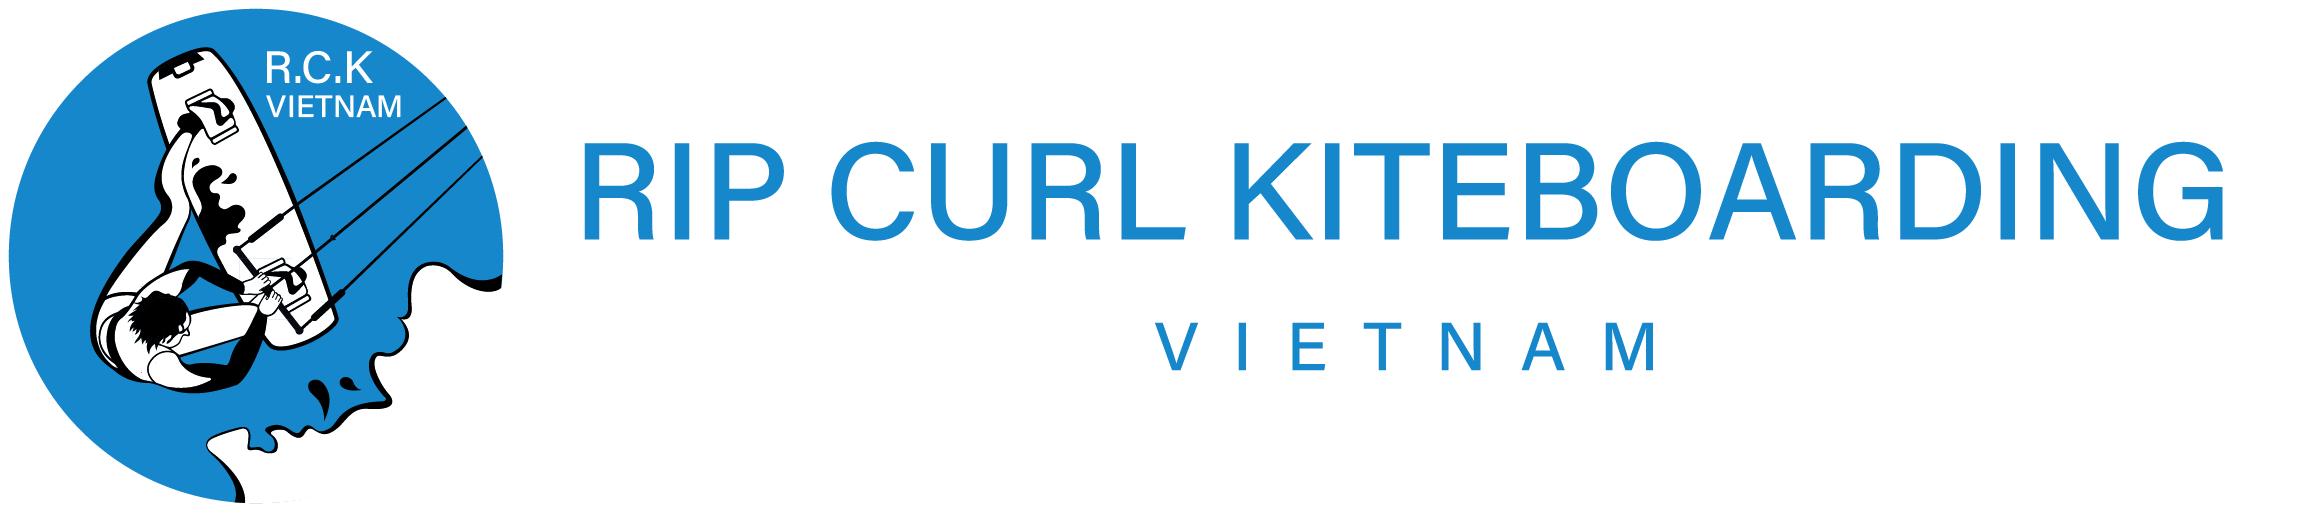 Rip curl Kiteboarding vietnam Logo